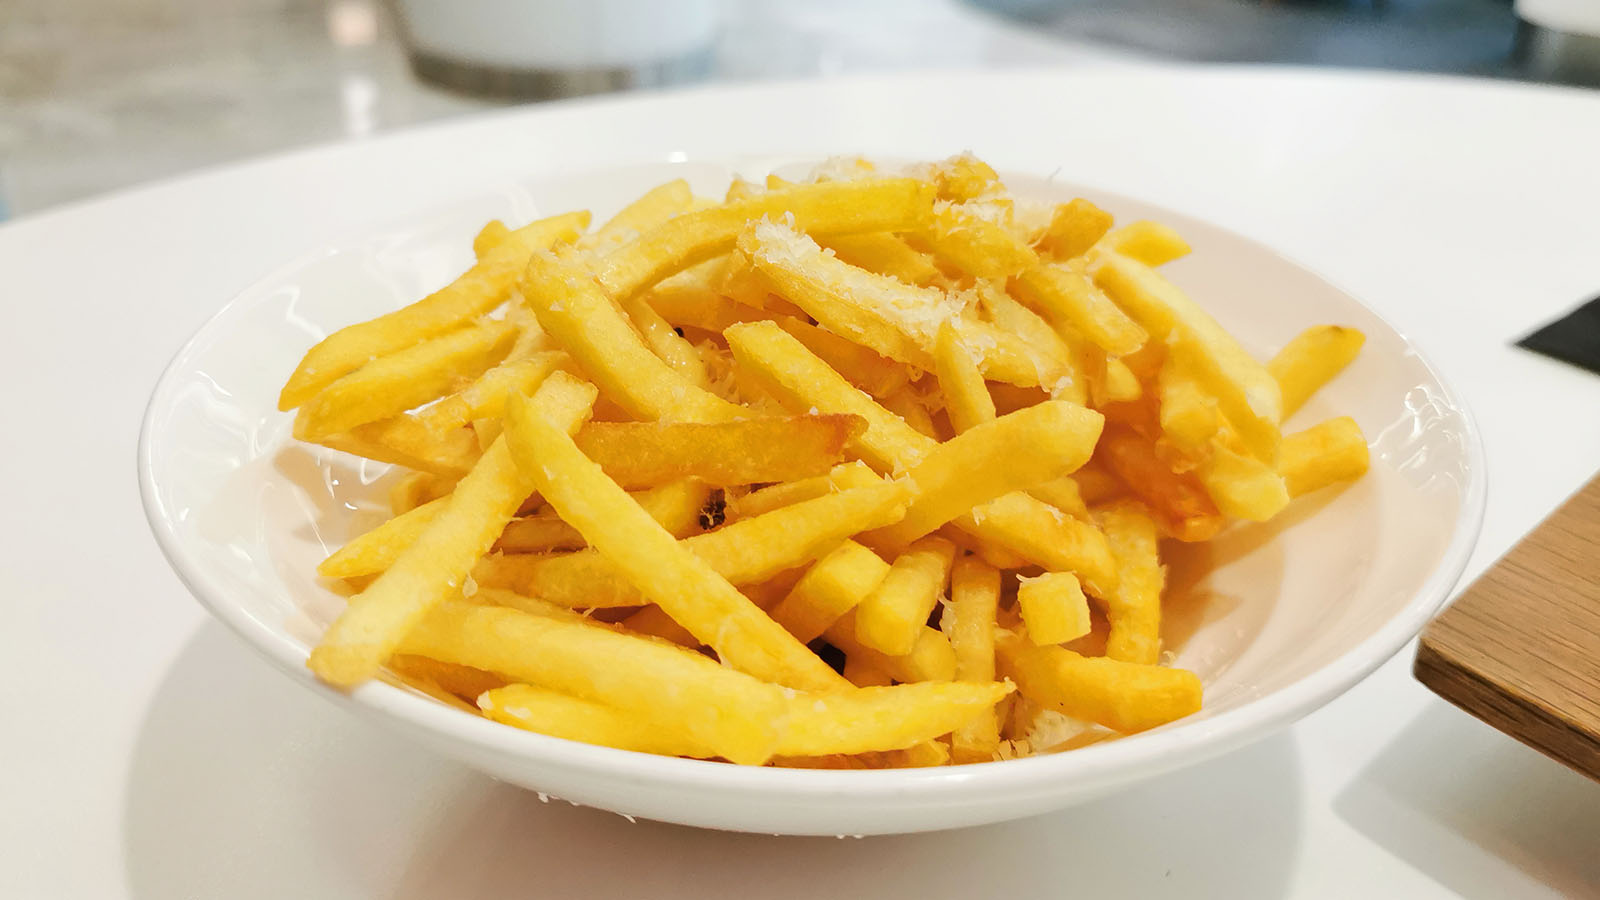 Parmesan truffled fries at Virgin Australia Beyond Lounge in Brisbane